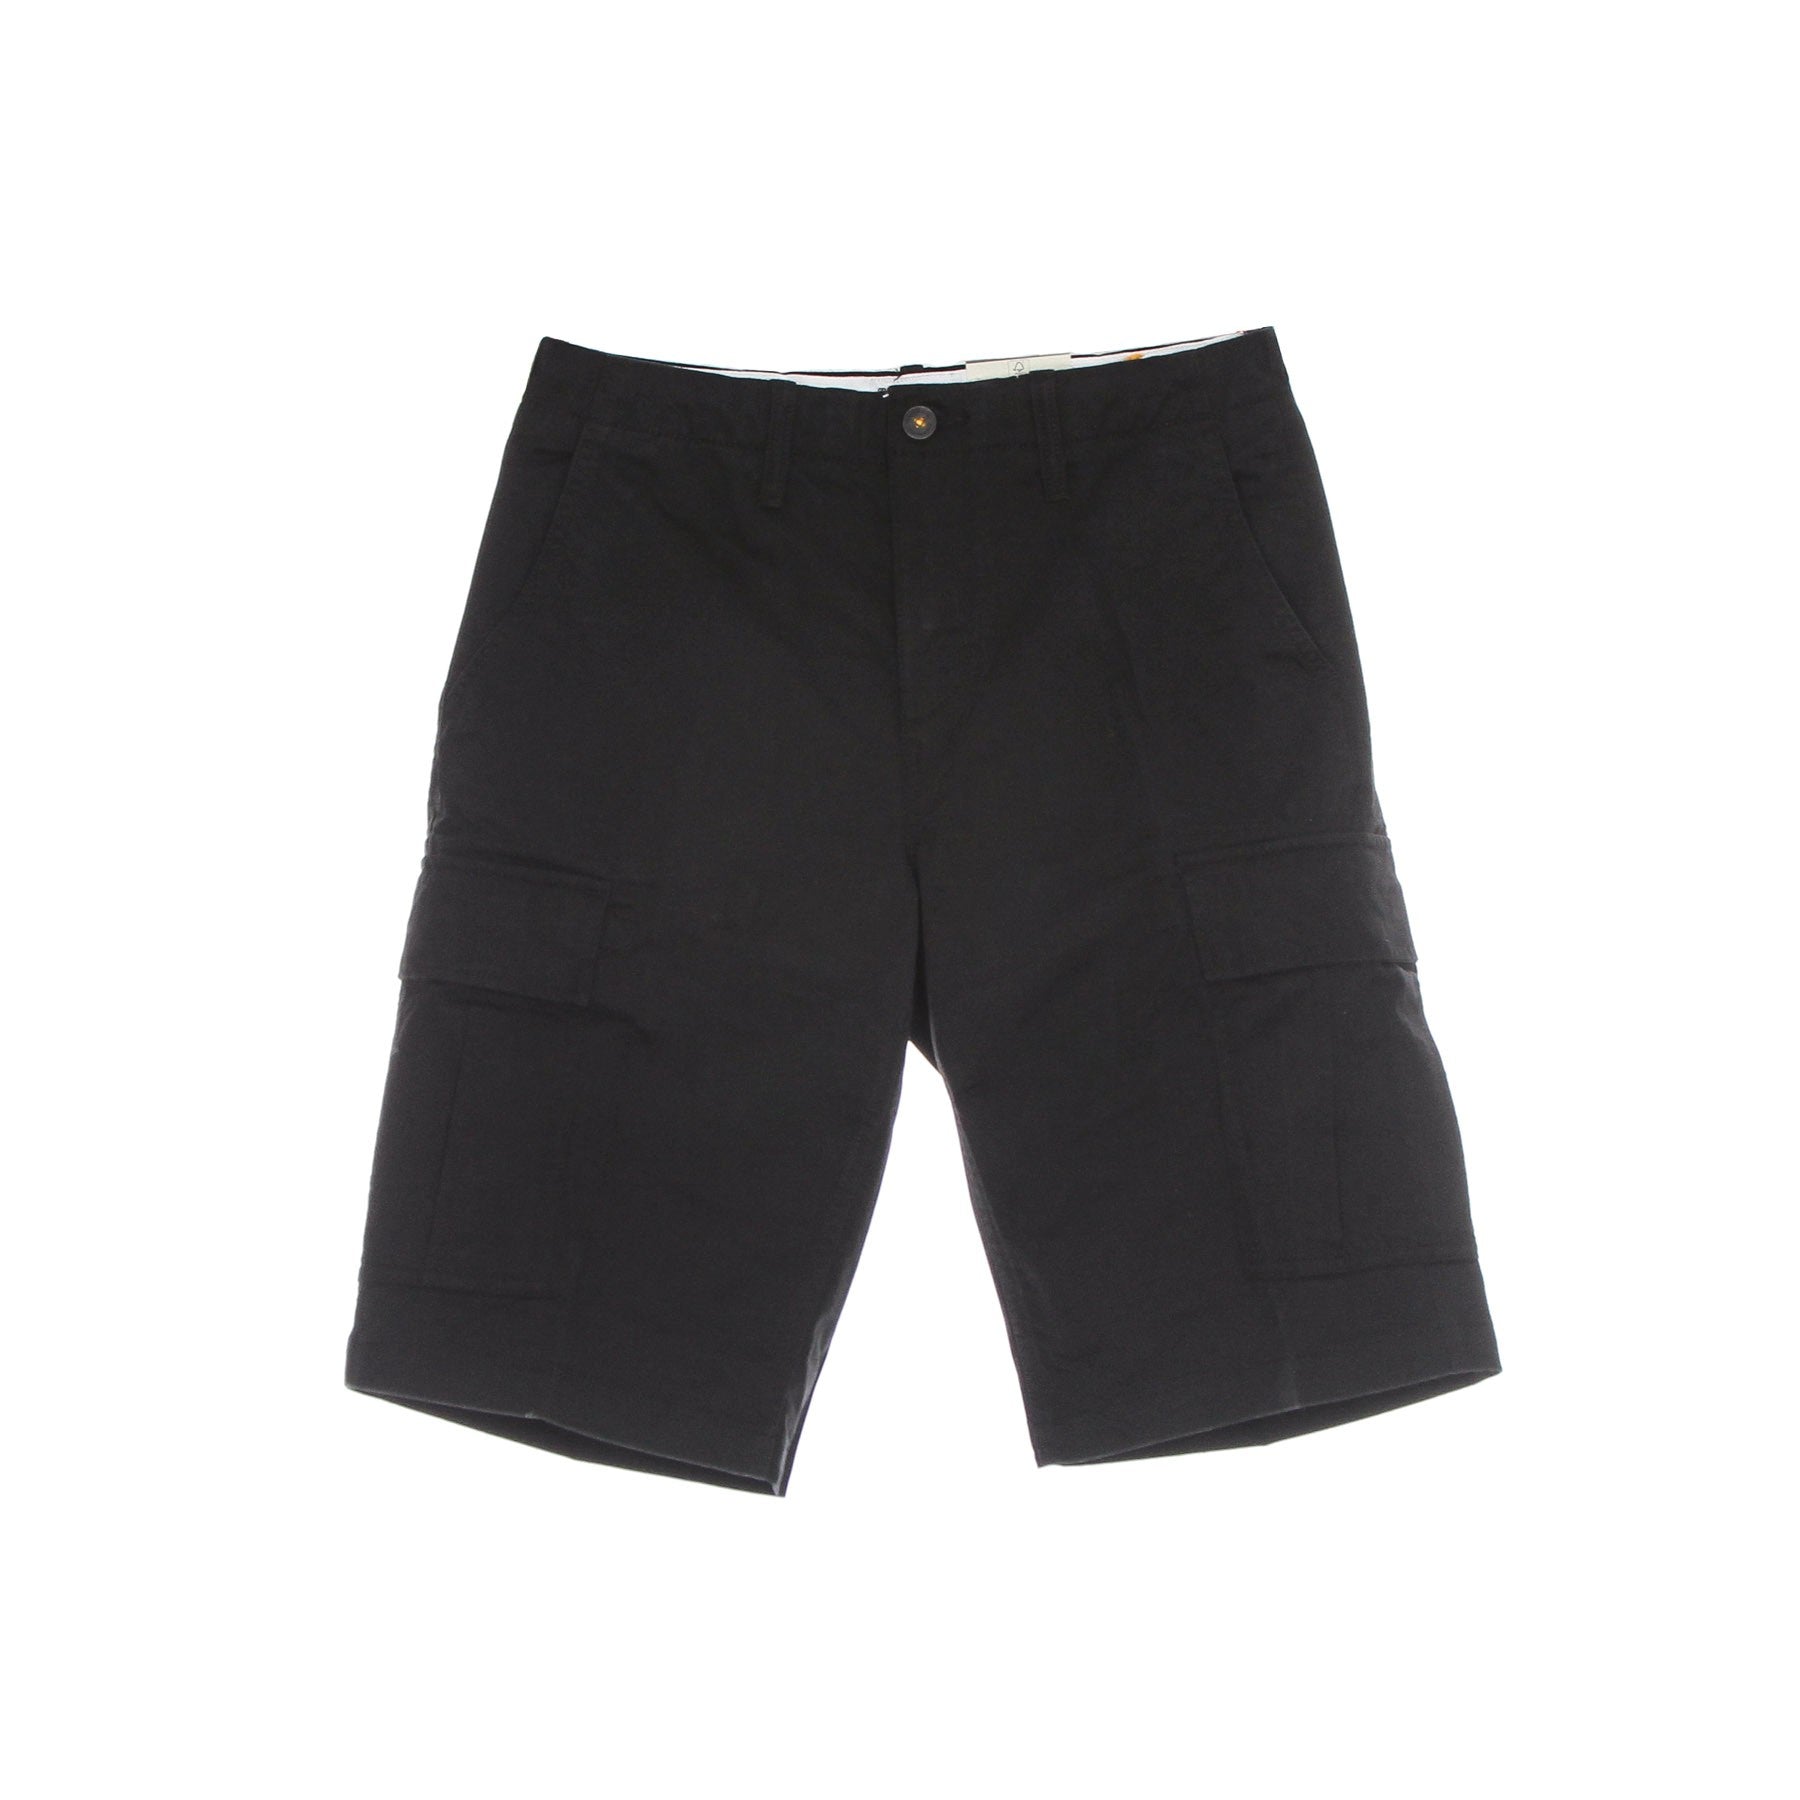 Timberland, Pantalone Corto Uomo Outdoor Cargo Short, Black